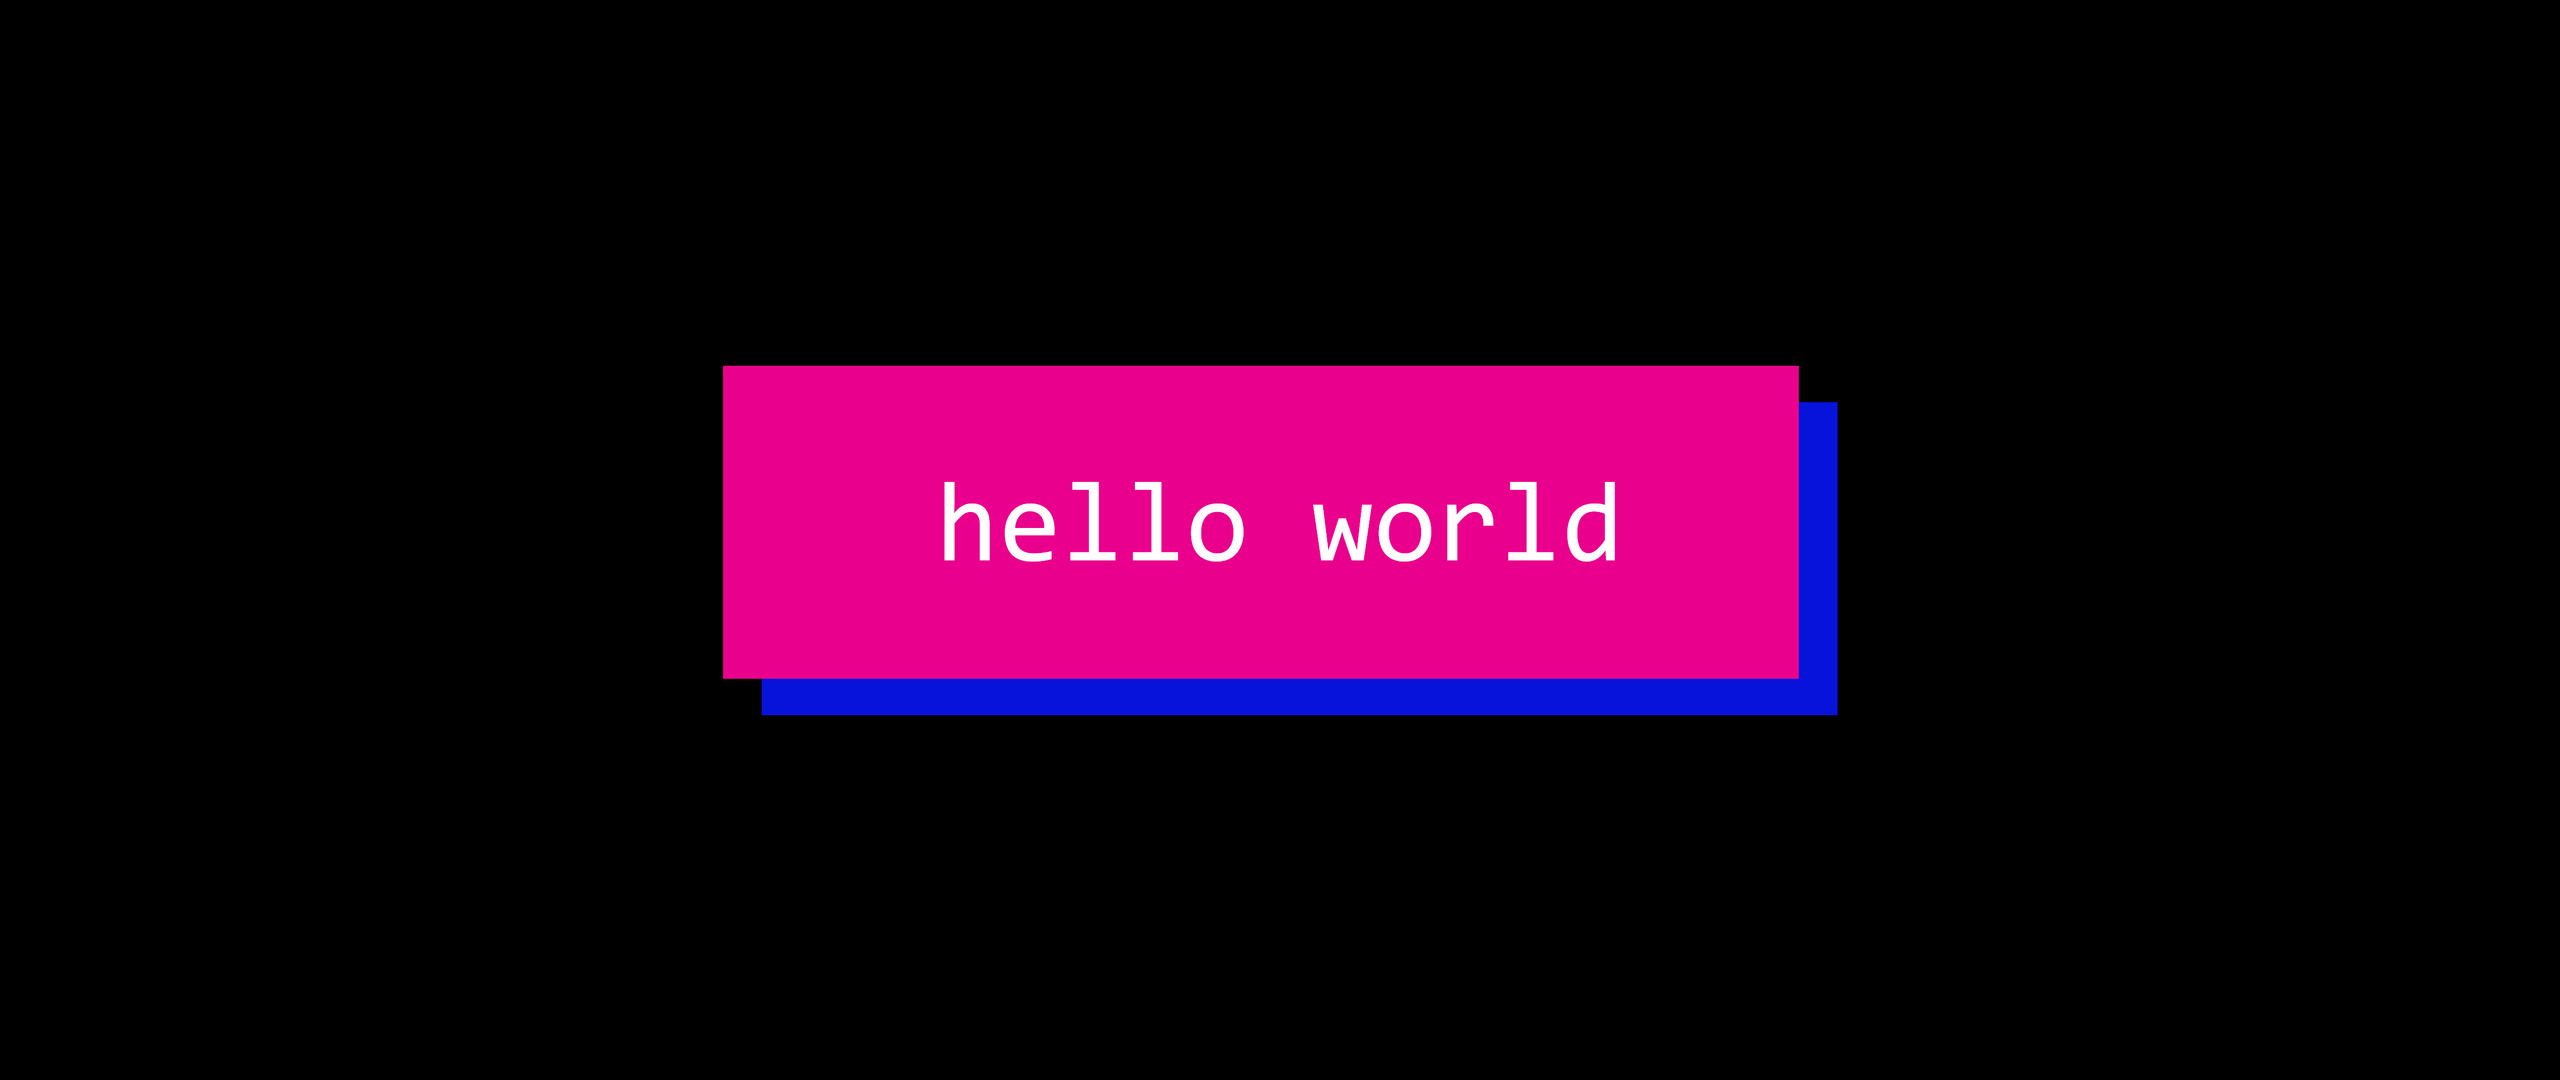 hello-world-dark-oled-5k-ak.jpg